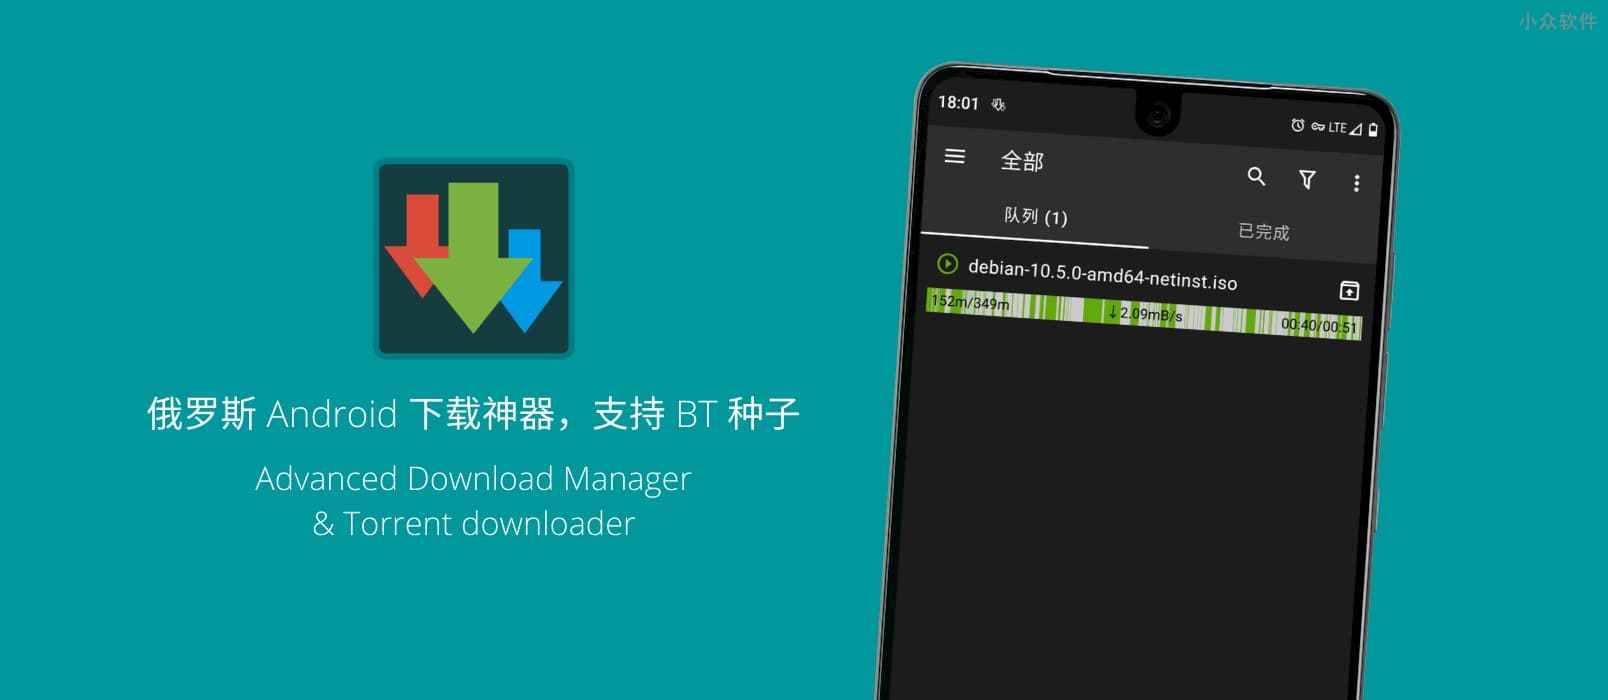 Advanced Download Manager(ADM) - 来自俄罗斯的 Android 下载神器，支持下载 BT 种子 1